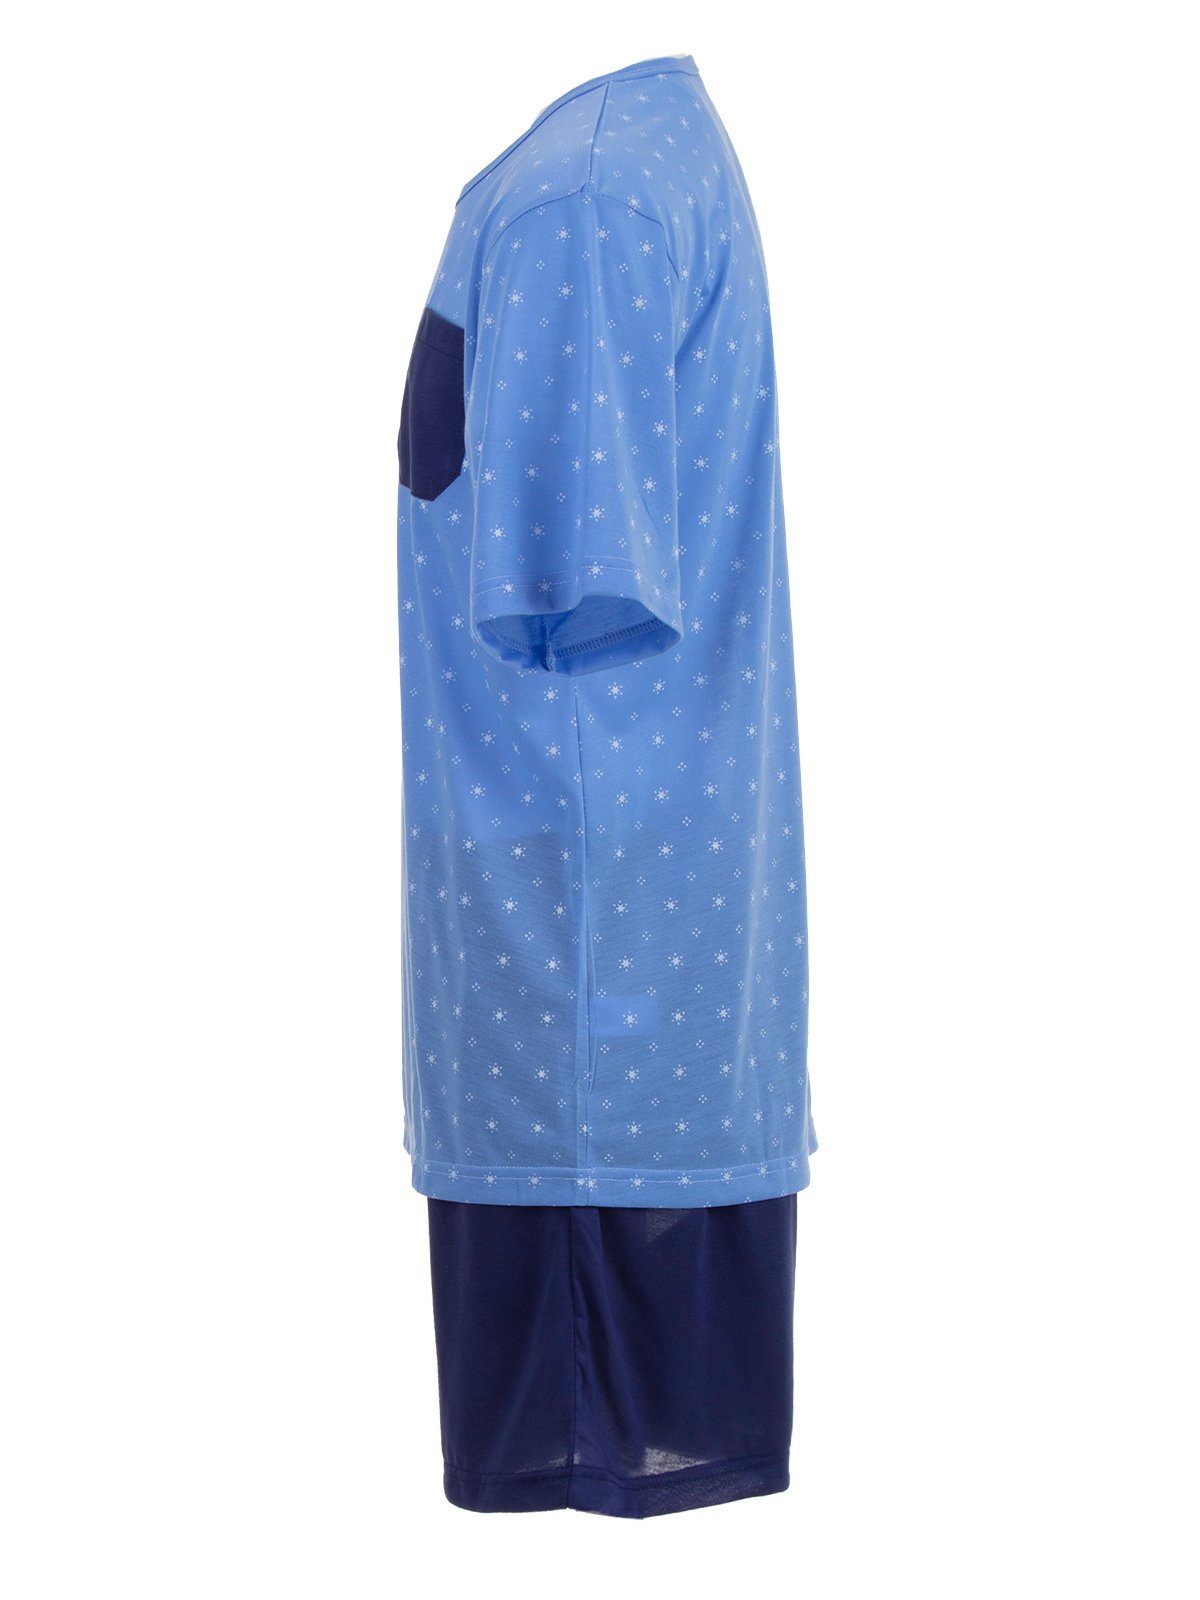 Lucky Schlafanzug Pyjama Set - Shorty Sonne blau Tasche